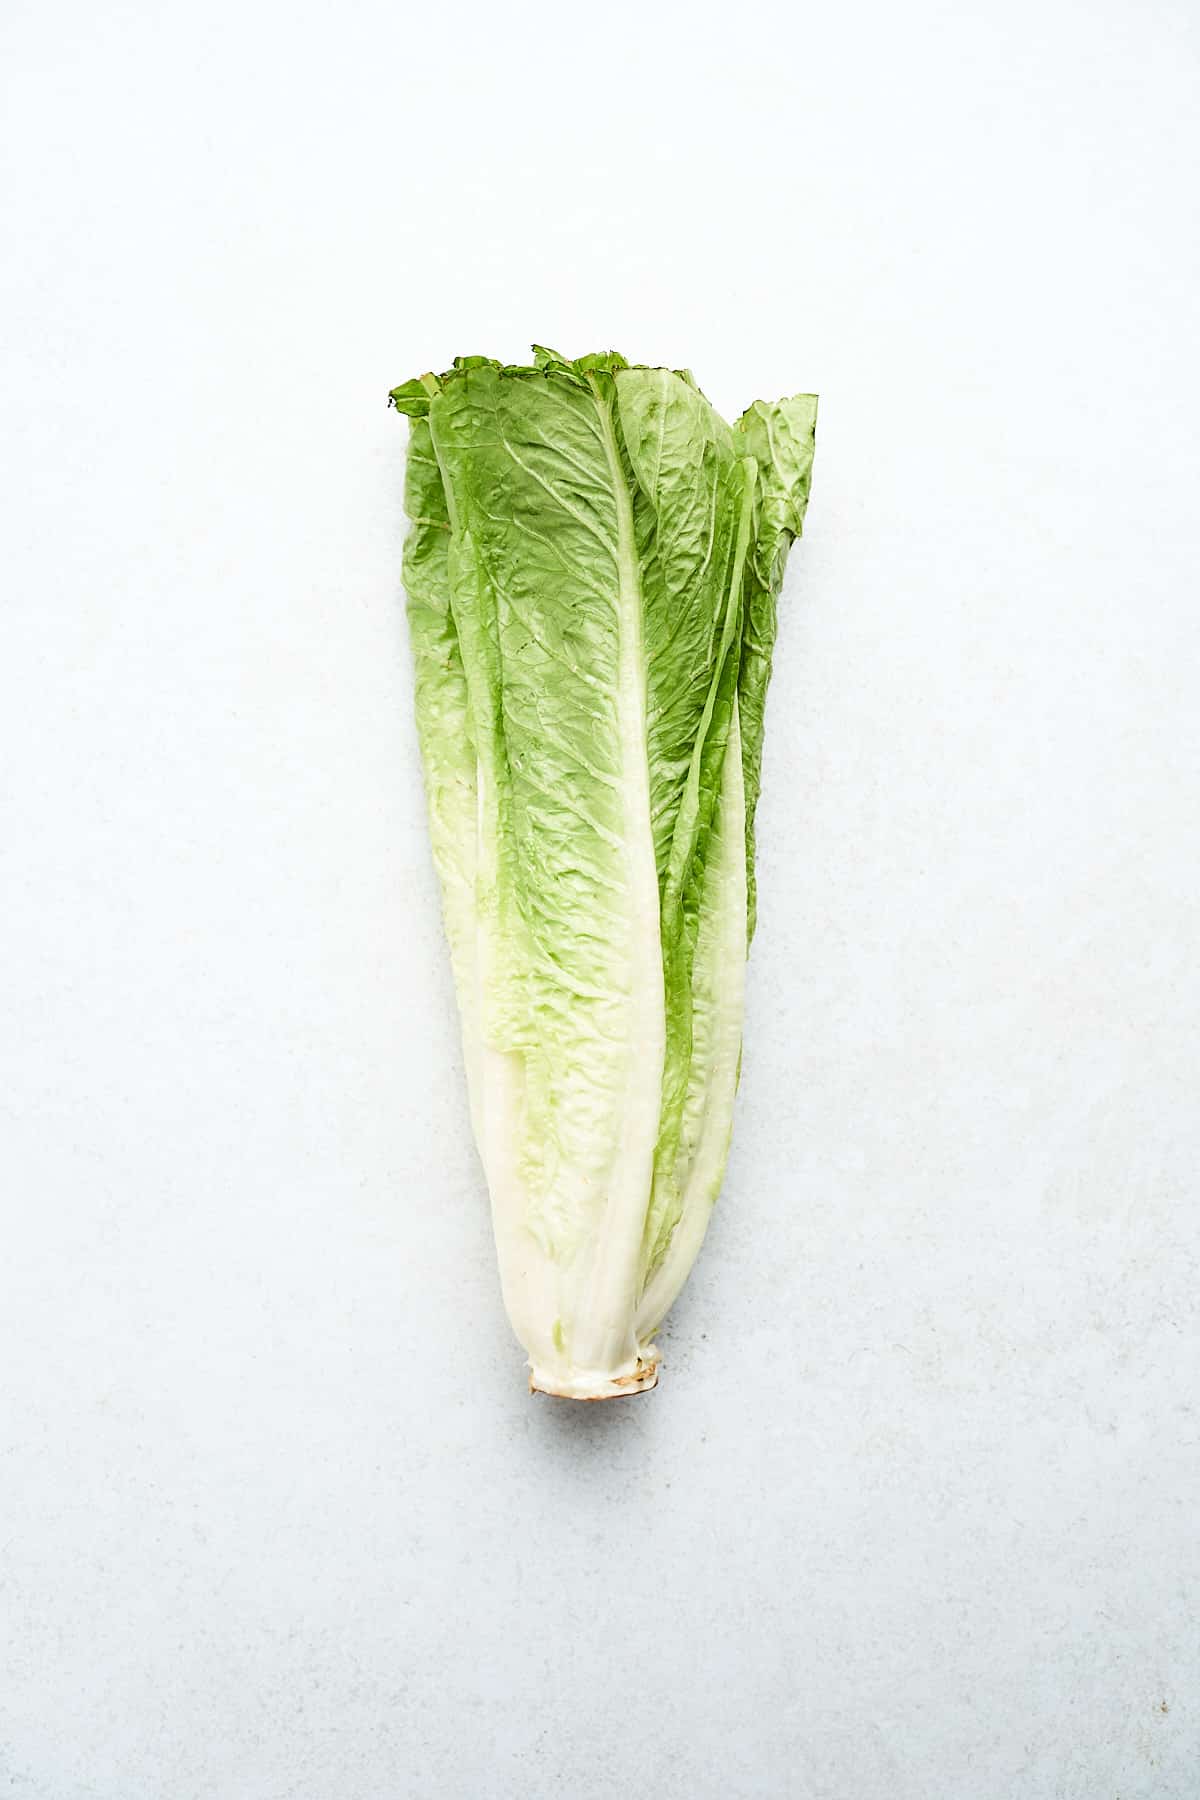 Romaine lettuce head.